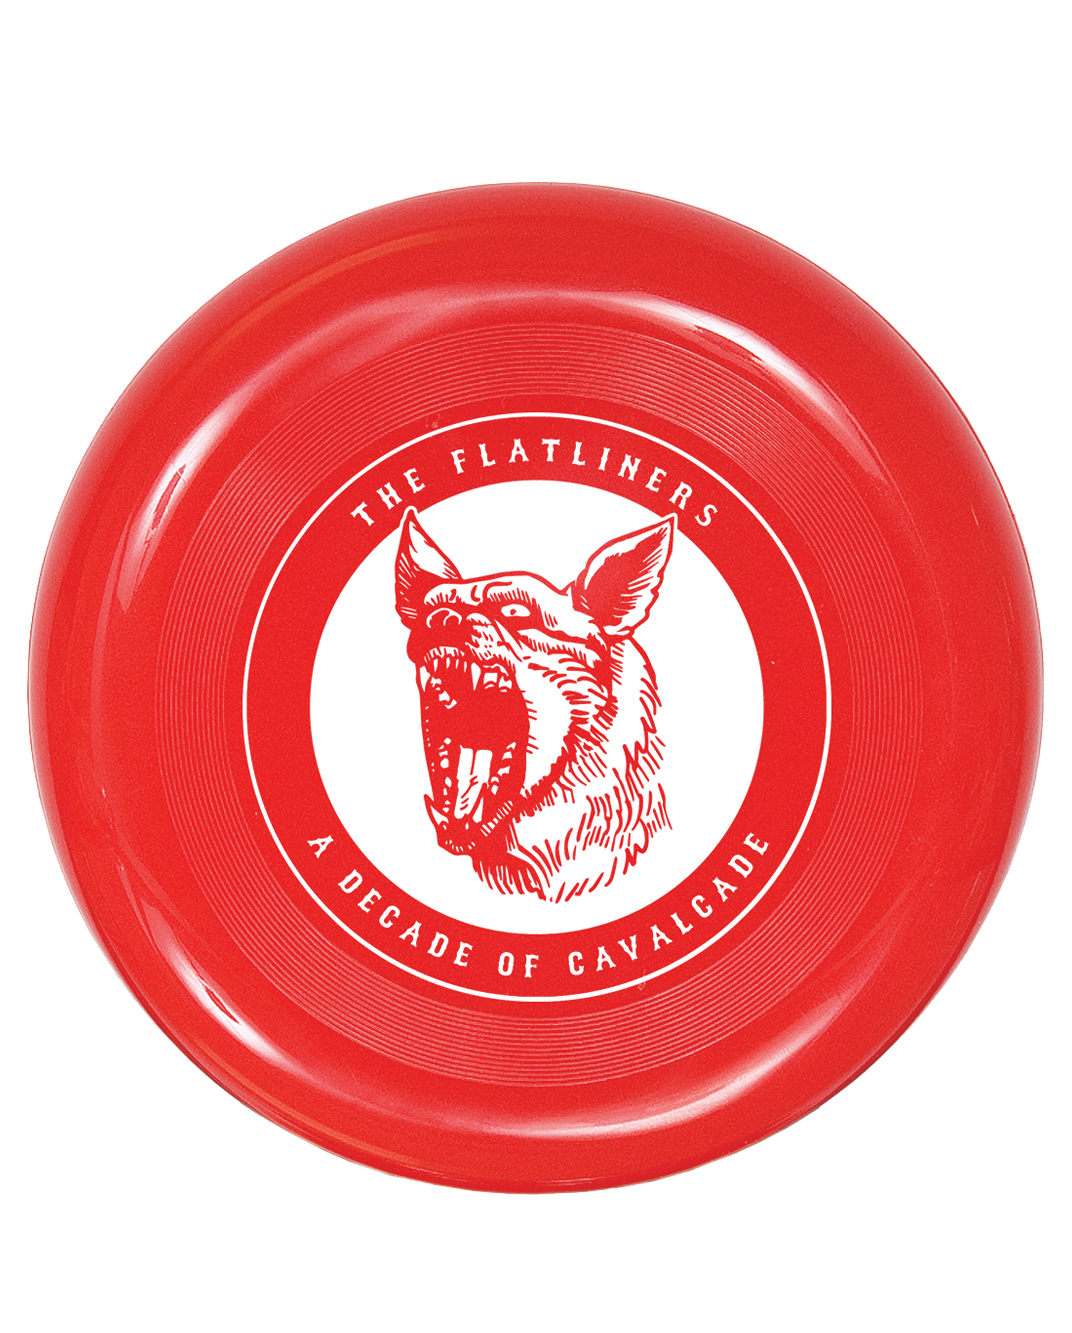 A Decade of Cavalcade Frisbee